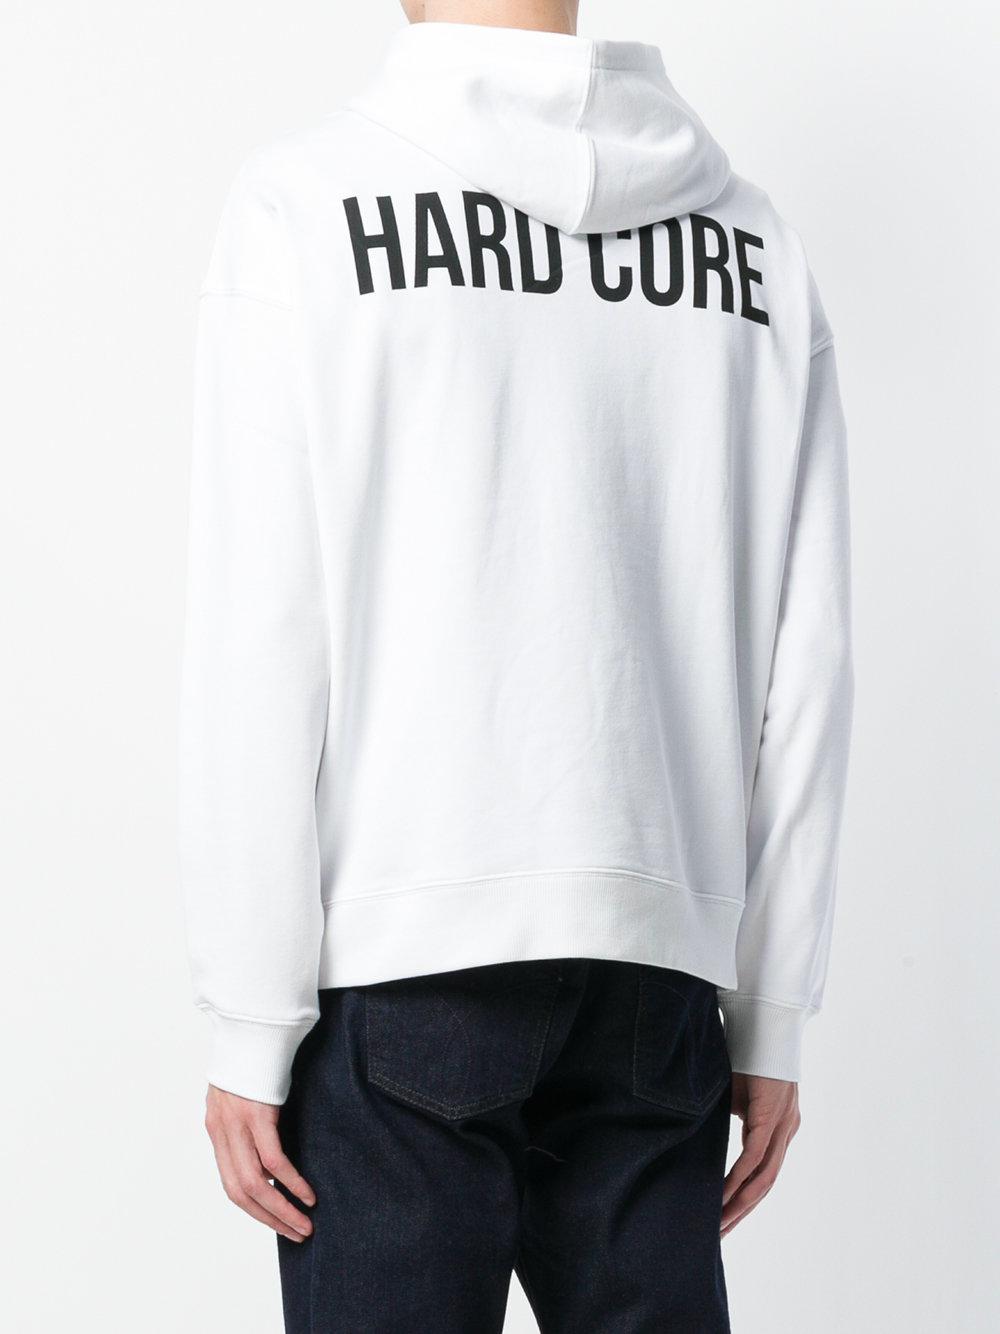 Calvin Klein Cotton Hardcore Drawstring Hoodie in White for Men - Lyst